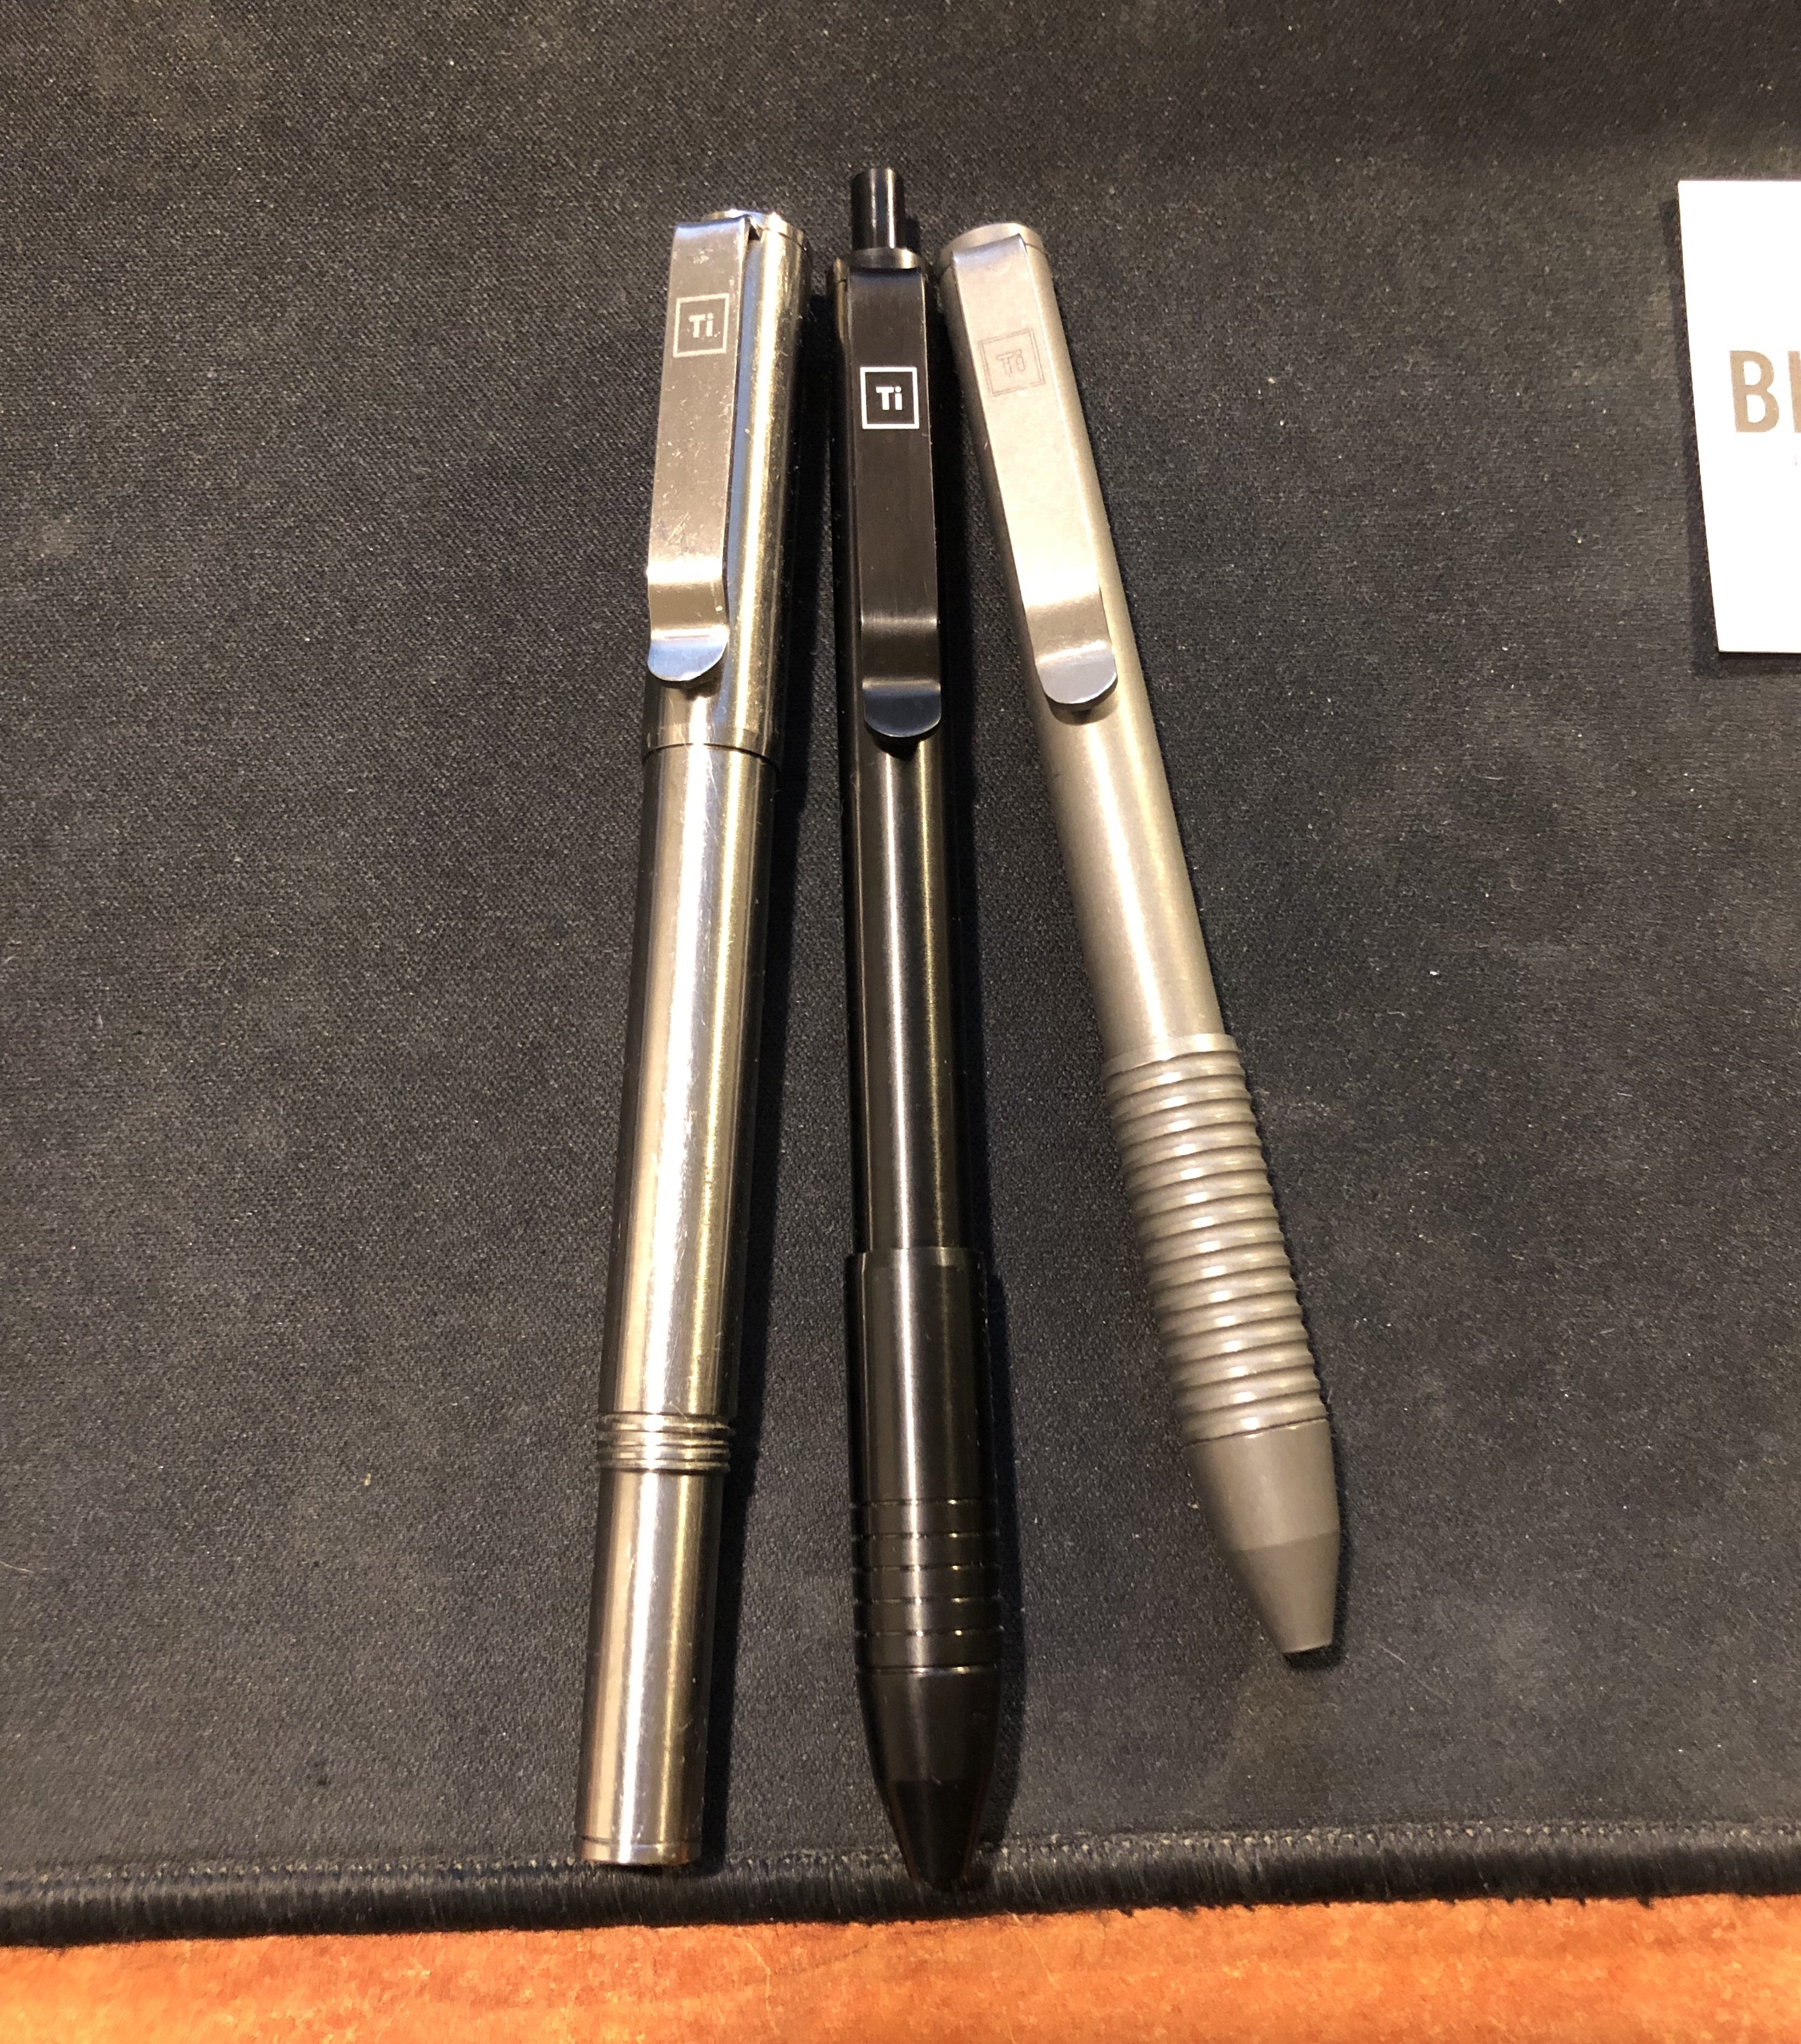 Big Idea Design Titanium Ballpoint & Stylus Review - My Pen Needs InkMy Pen  Needs Ink